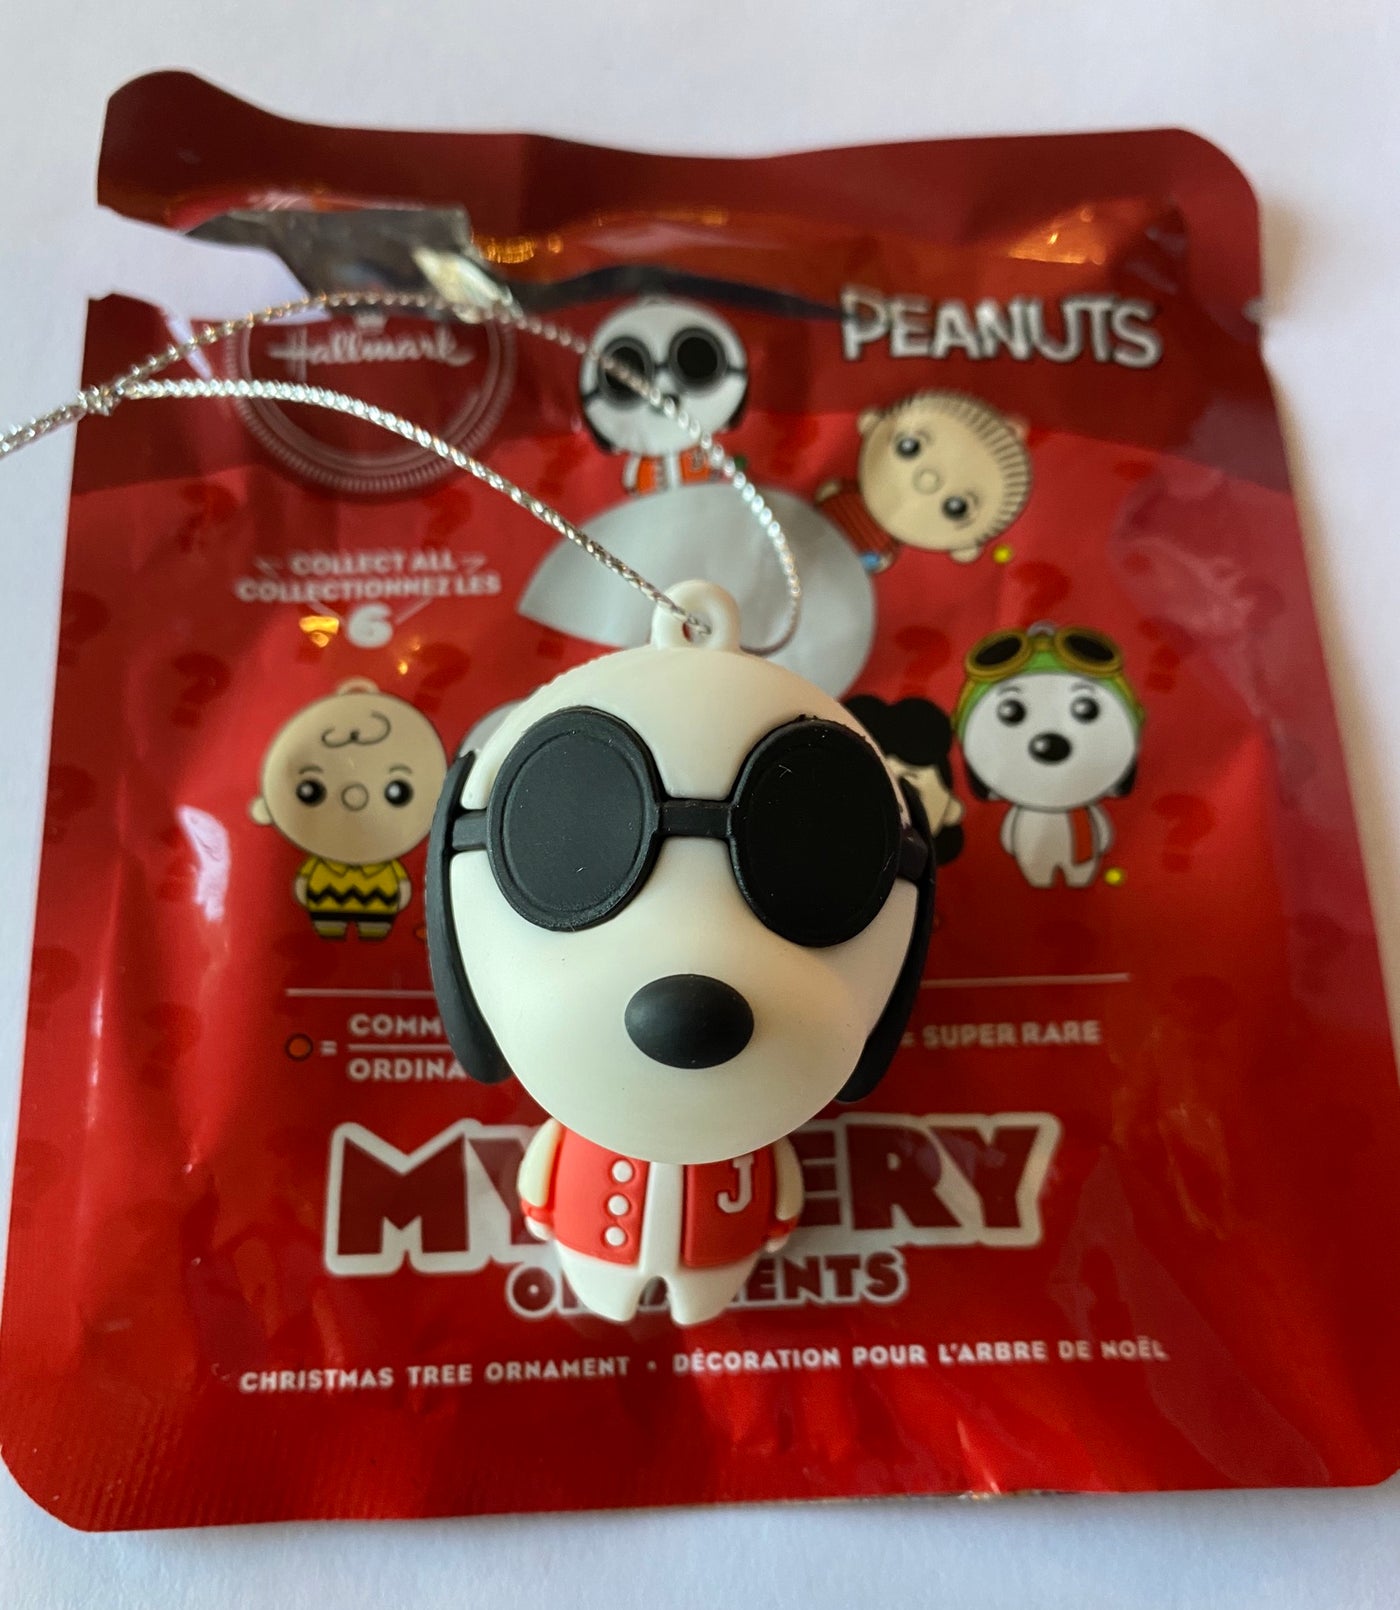 Hallmark Peanuts Gang Rare Snoopy Joe Cool Mystery Christmas Ornament New